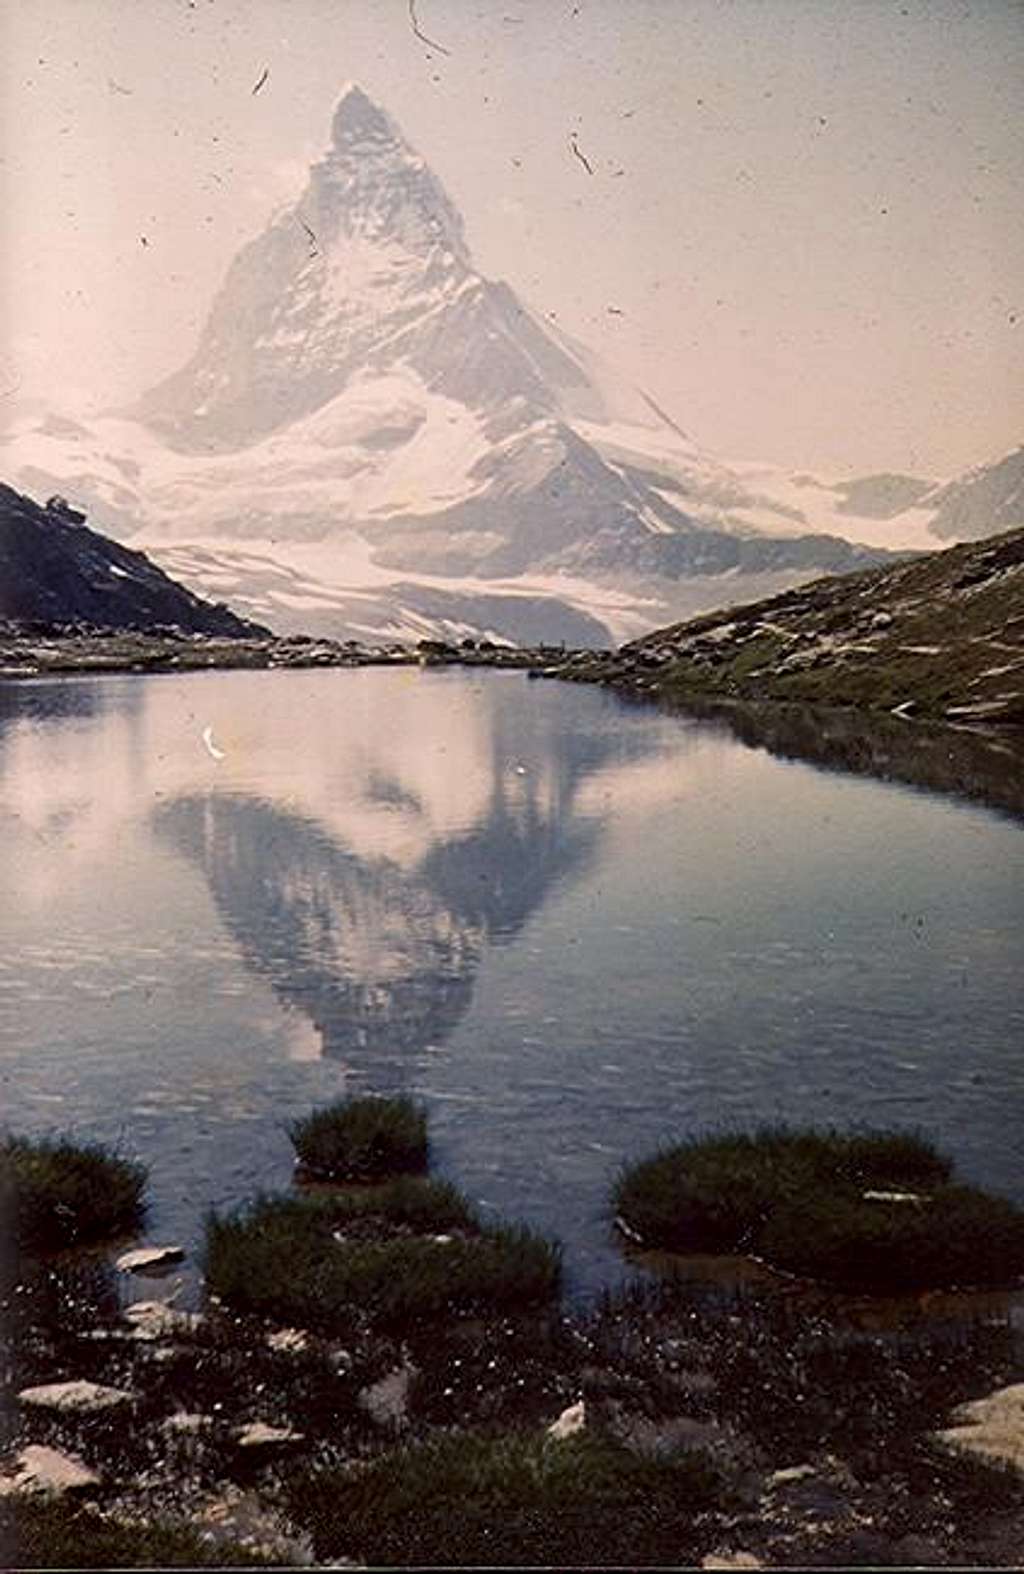 Matterhorn and reflection in...